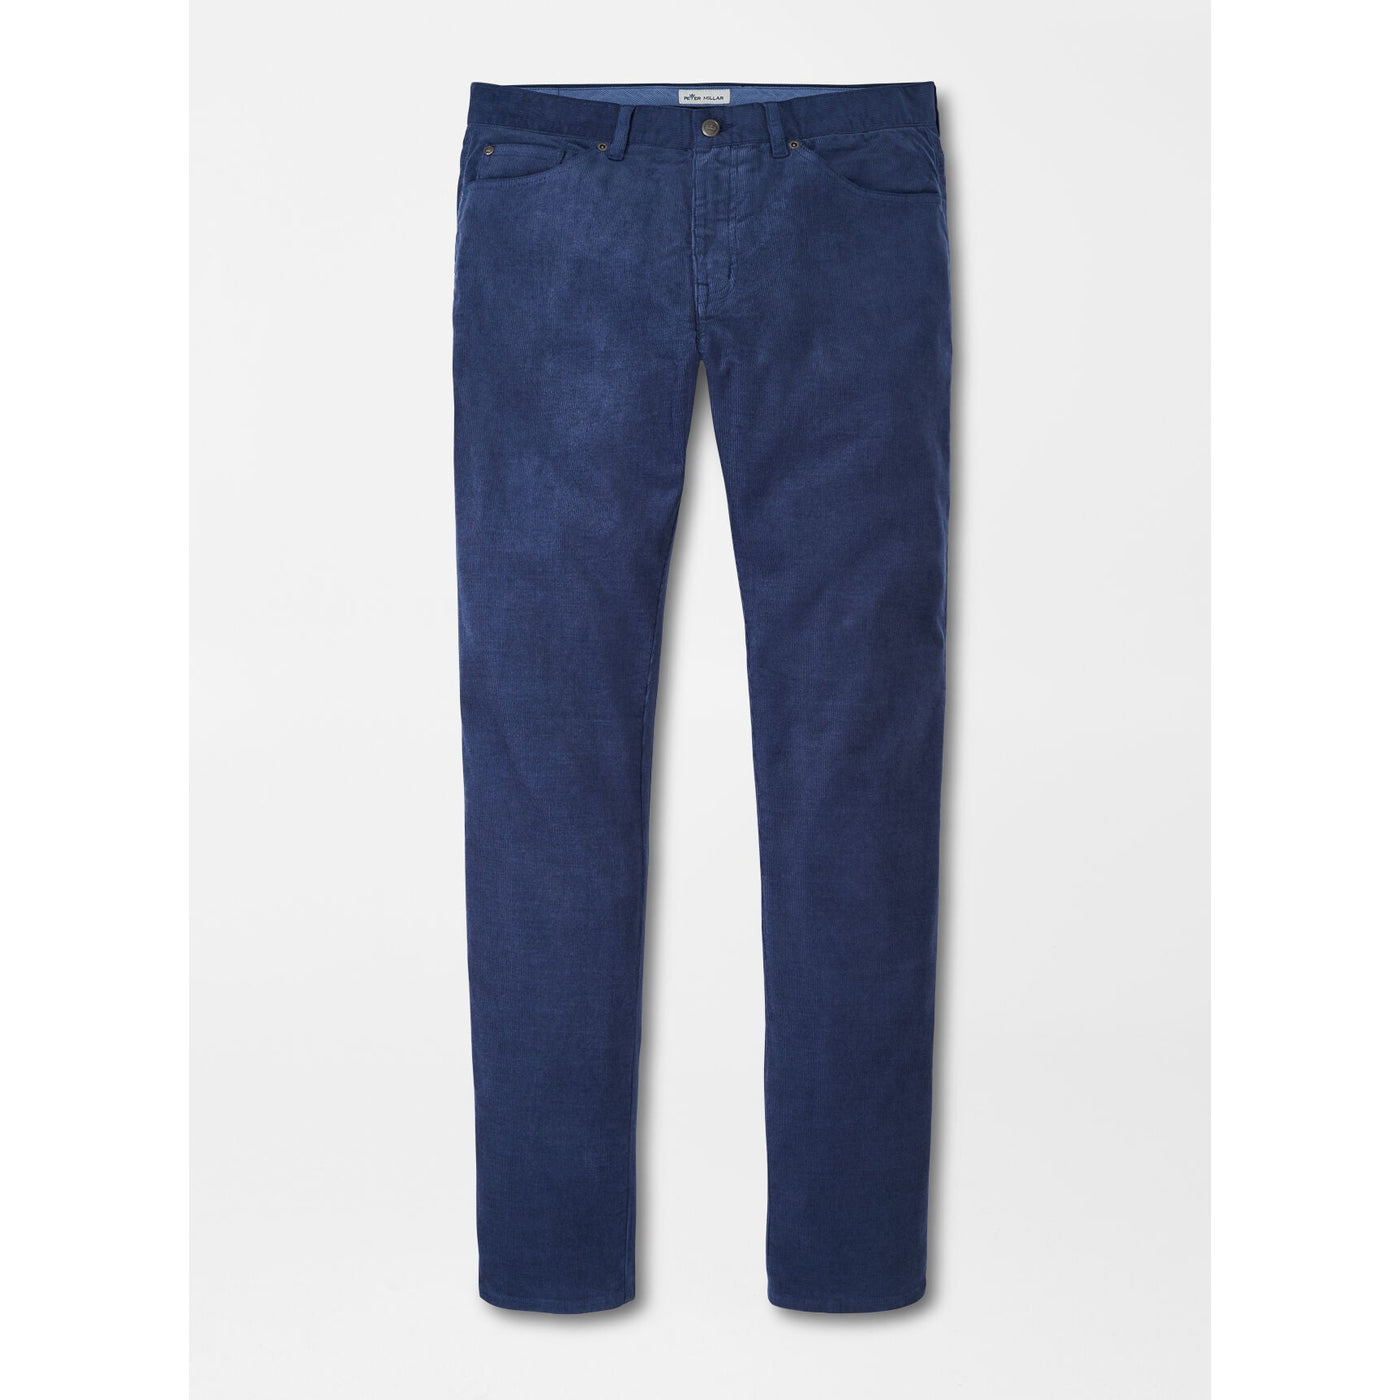 Peter Millar Superior Soft Corduroy Five-Pocket Pant-Men's Clothing-Ocean Blue-32-Kevin's Fine Outdoor Gear & Apparel